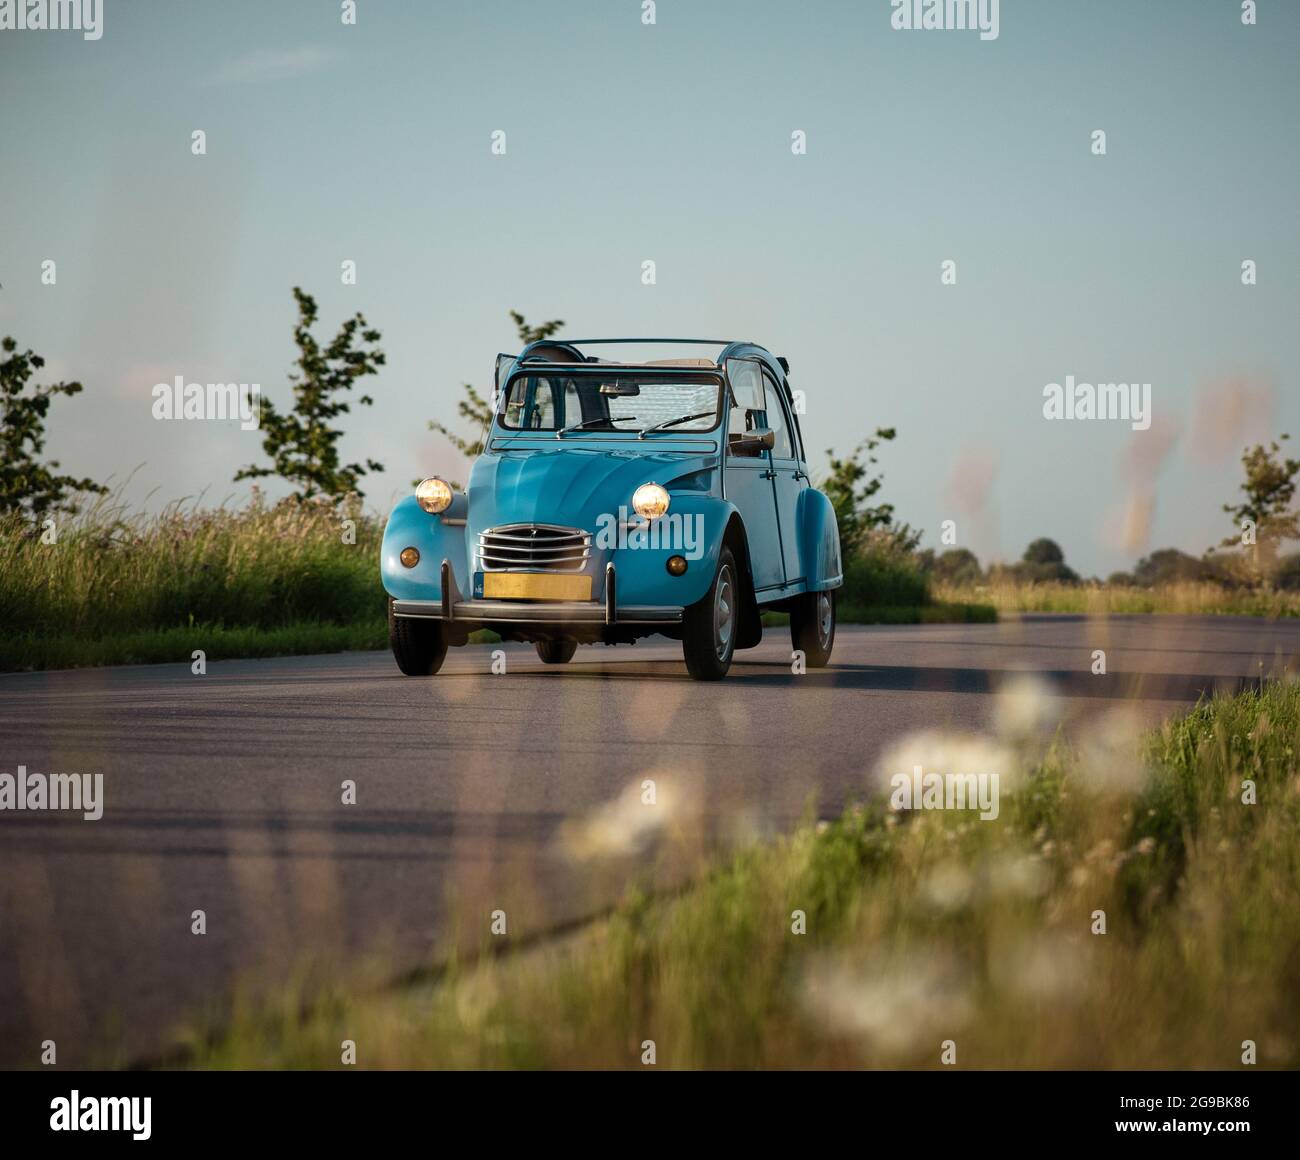 ZOETERMEER, NETHERLANDS - Jul 15, 2021: A Blue Citroen 2CV (Deux Chevaux) classic car on the road Stock Photo